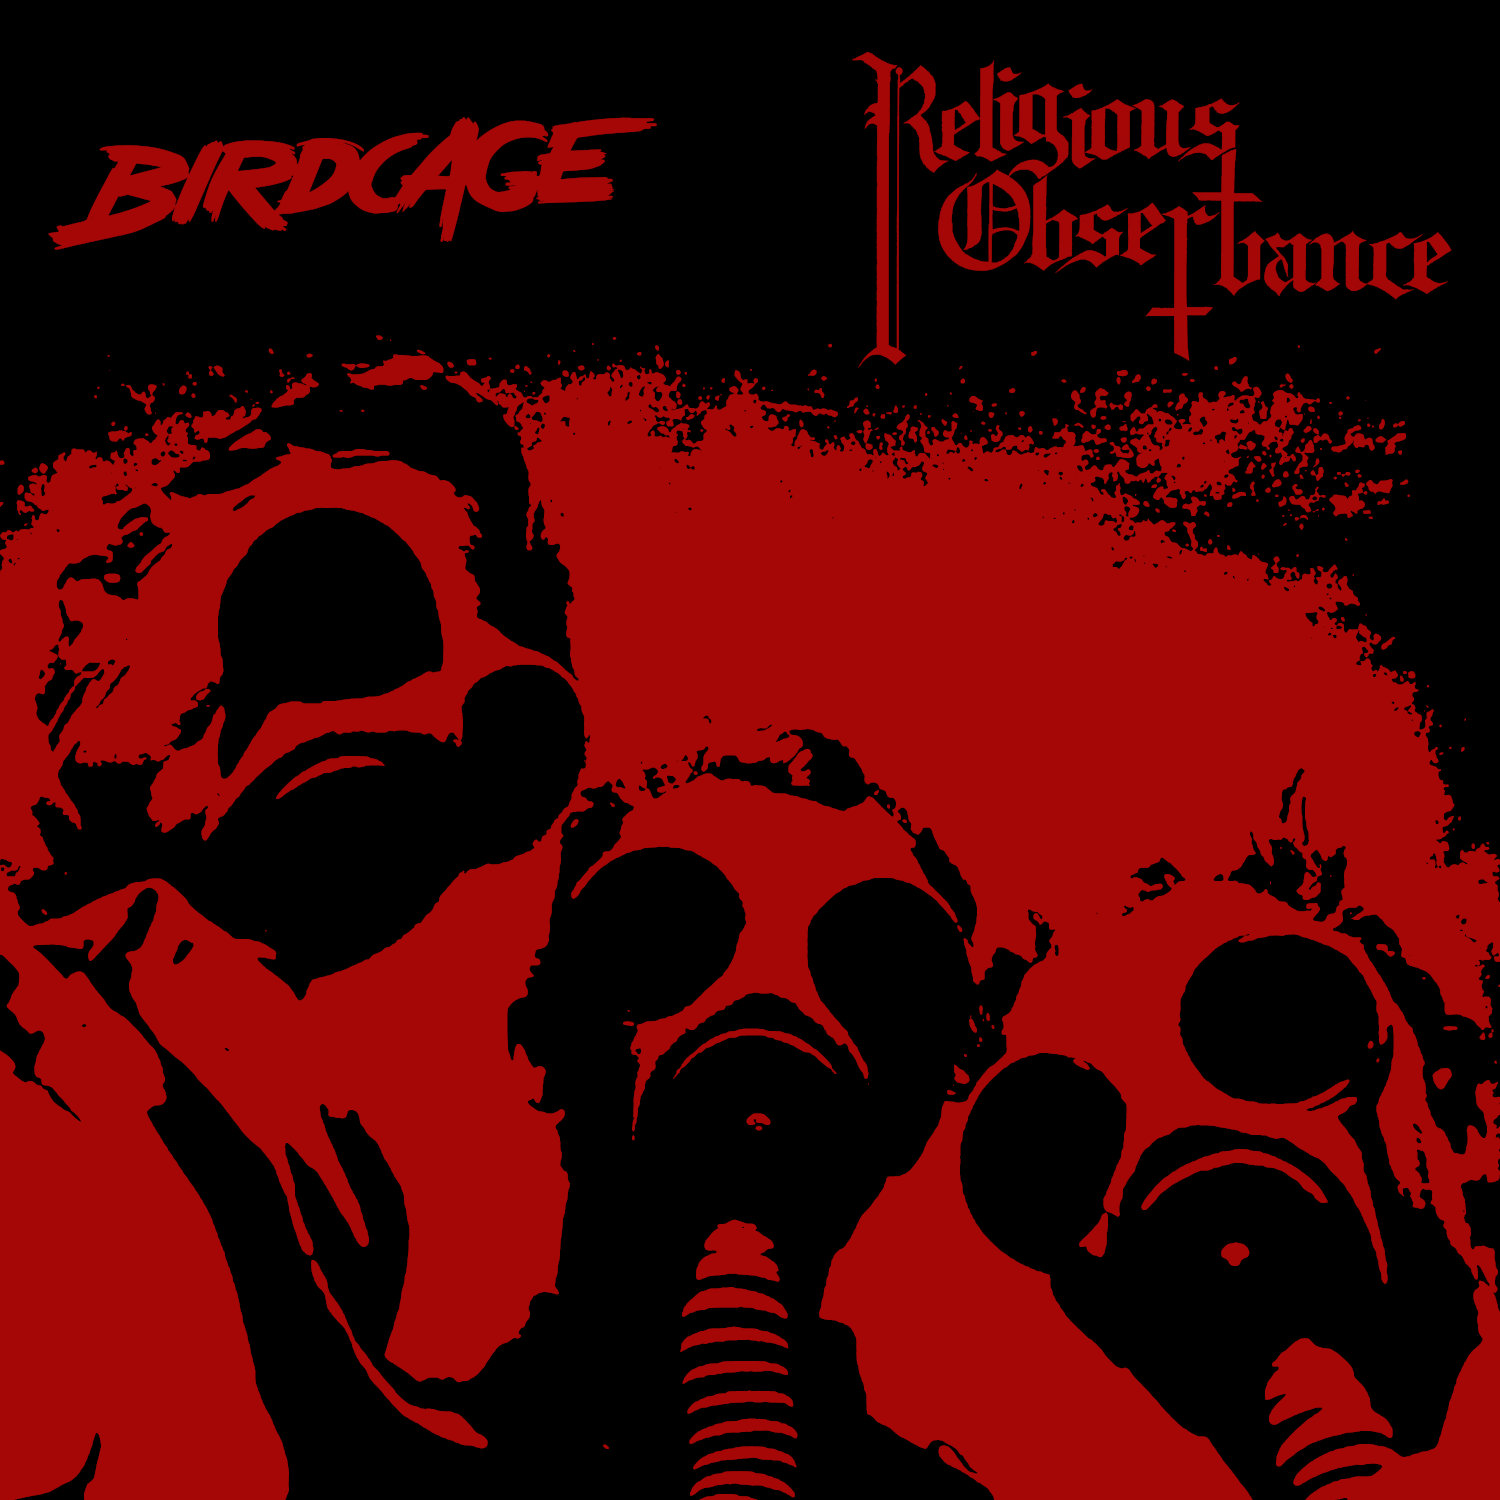 RELIGIOUS OBSERVANCE - Birdcage / Religious Observance cover 